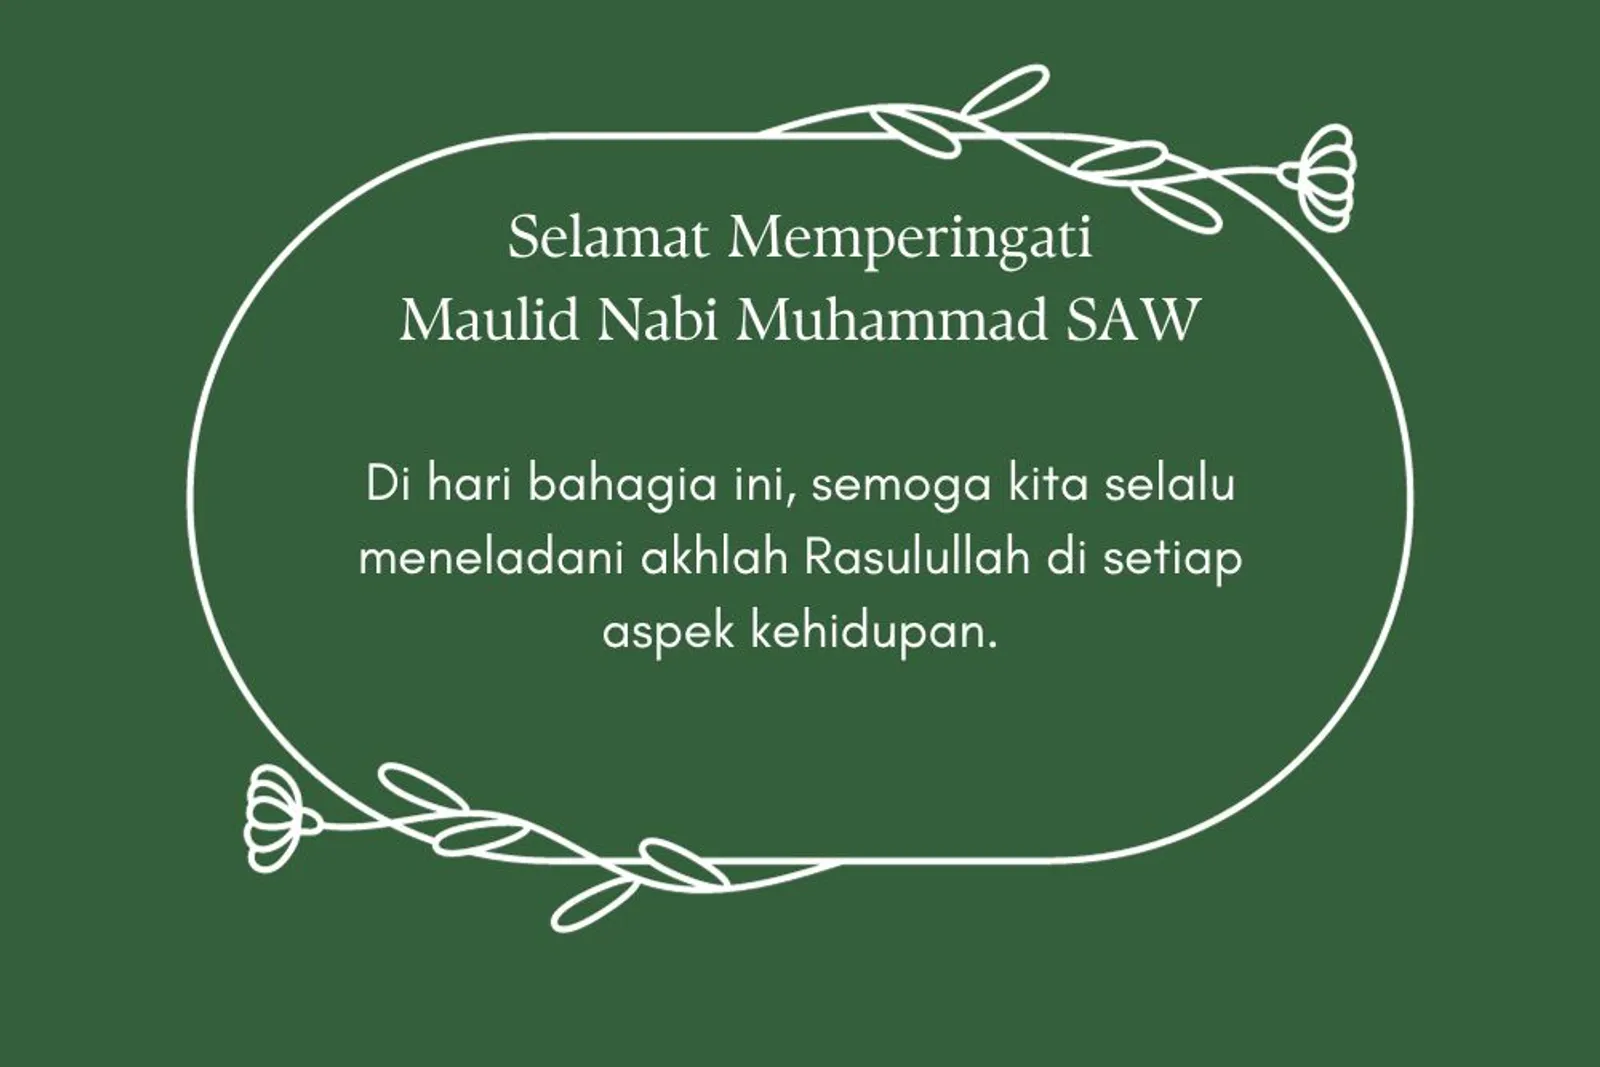 20 Ucapan Maulid Nabi Muhammad SAW dalam Bahasa Inggris & Indonesia